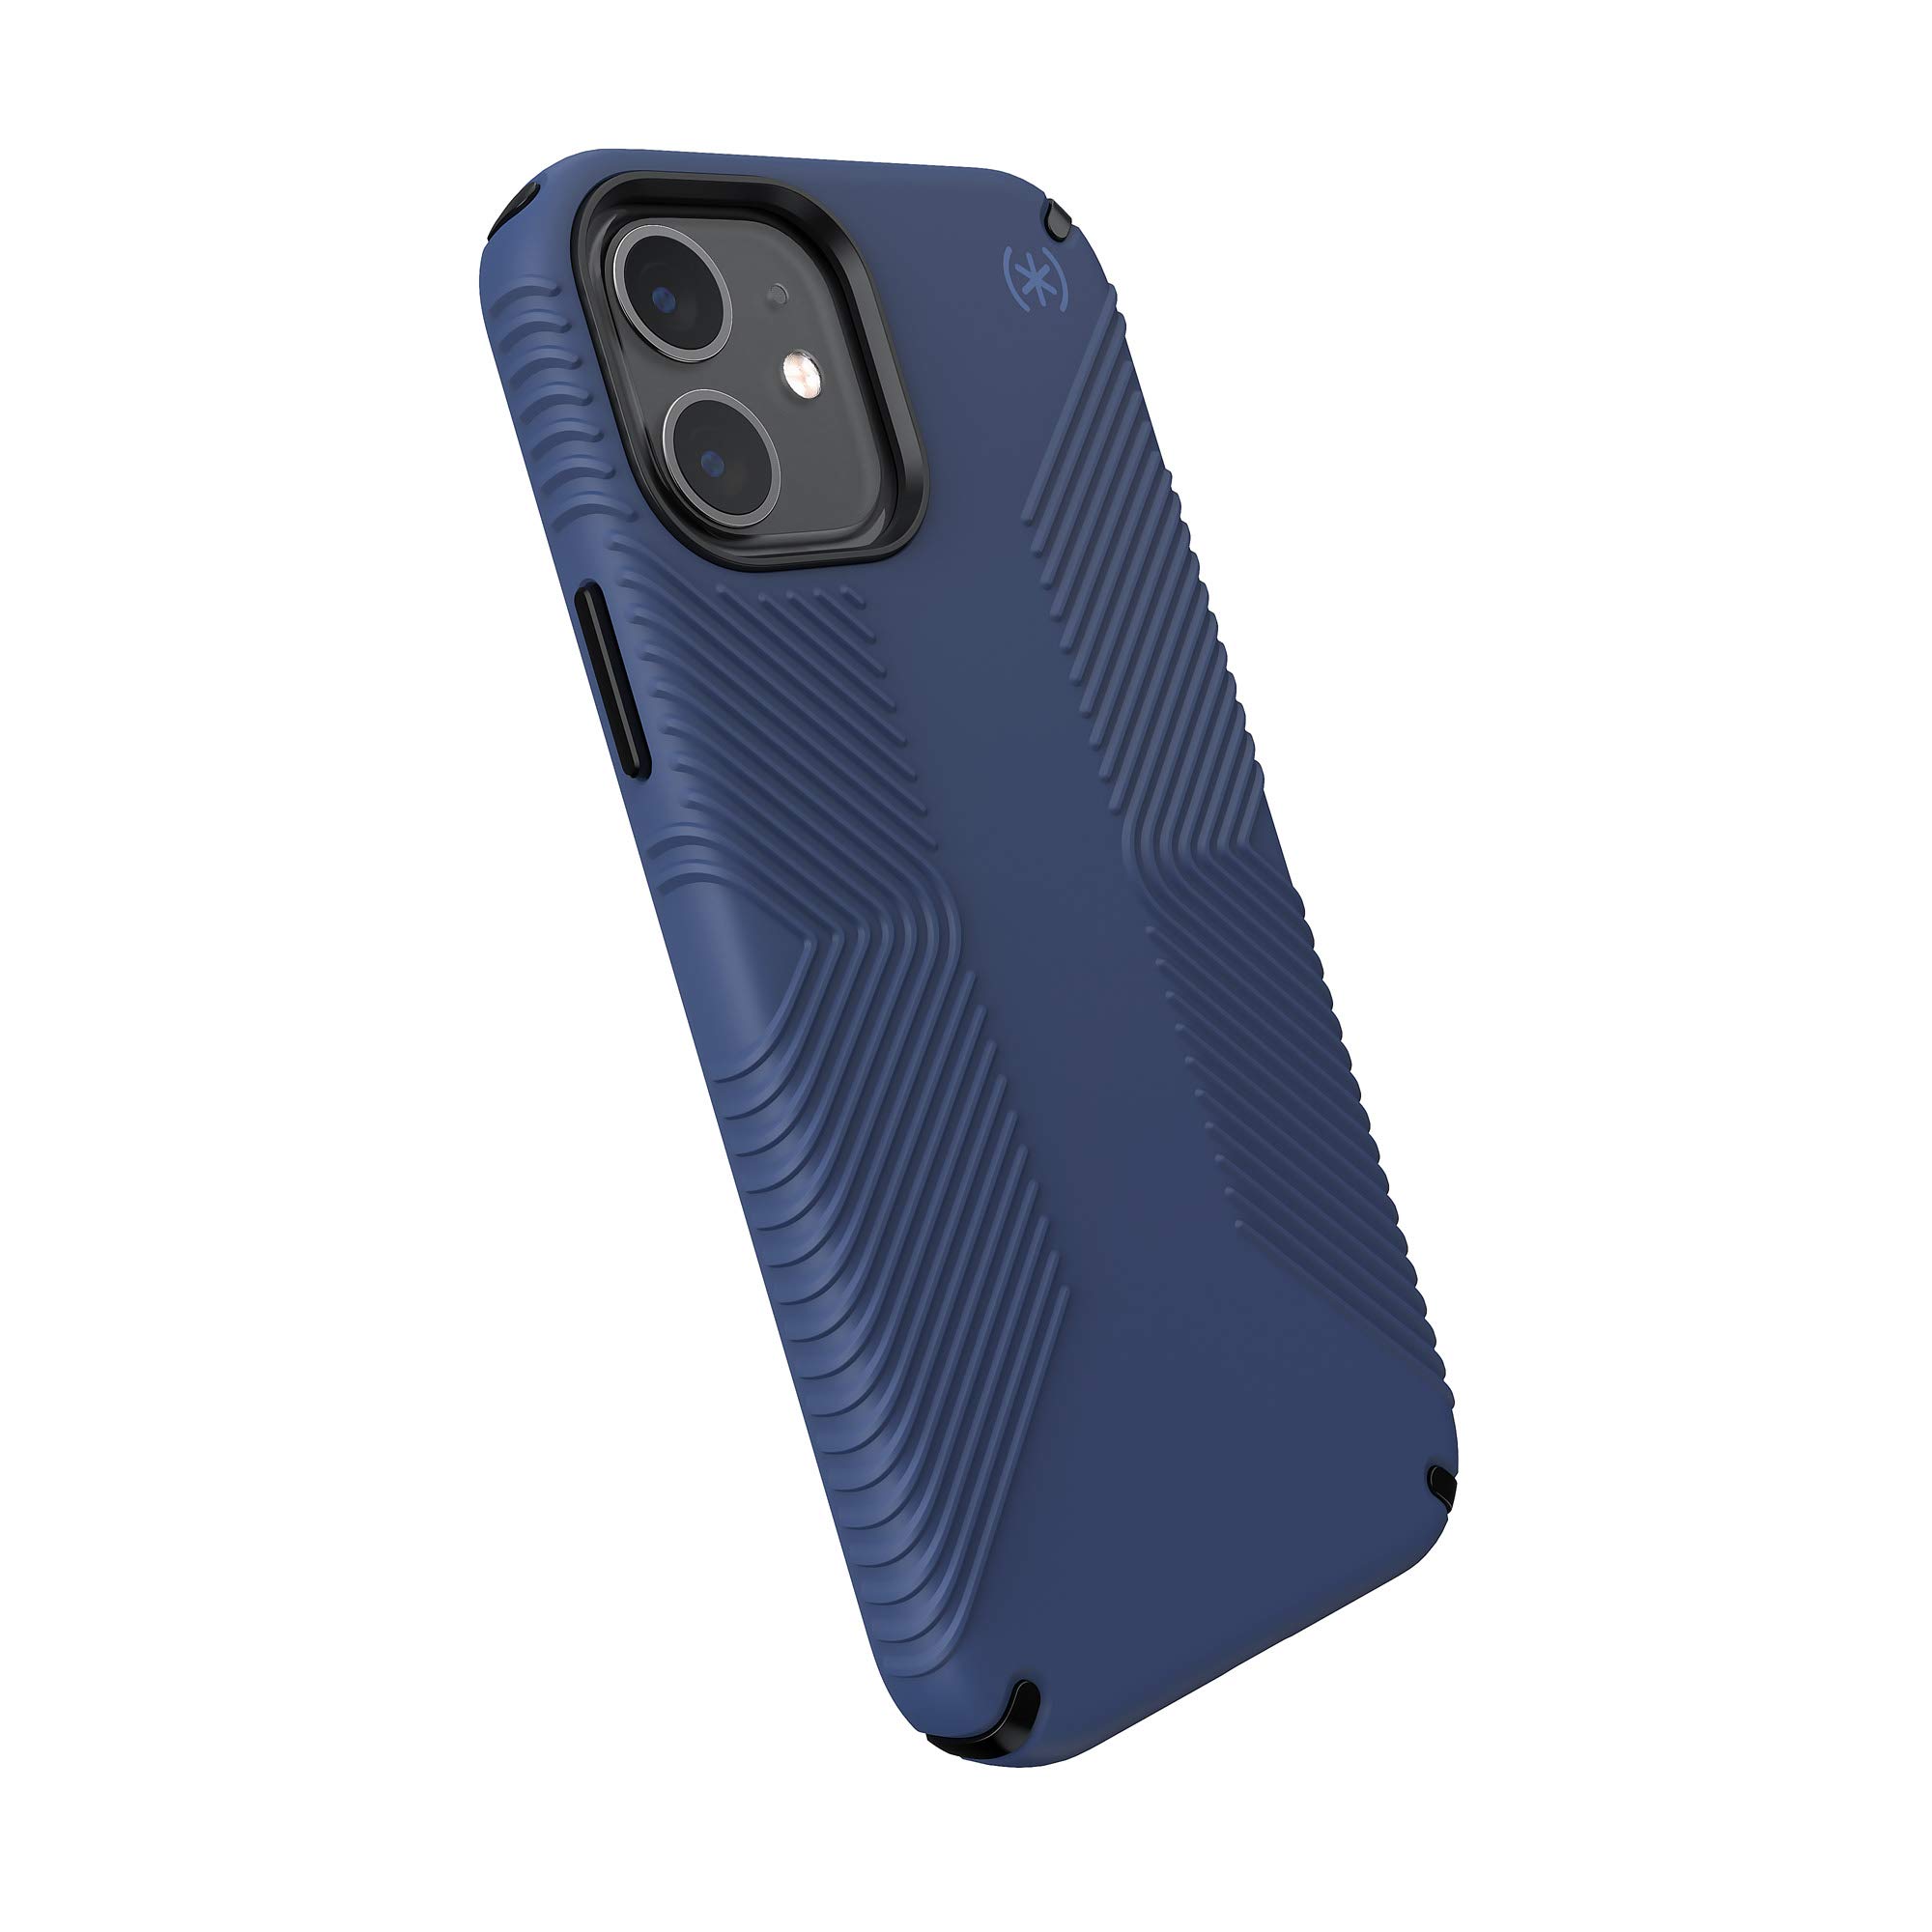 Speck Products Presidio2 Grip iPhone 12, iPhone 12 Pro Case, Coastal Blue/Black/Storm Blue